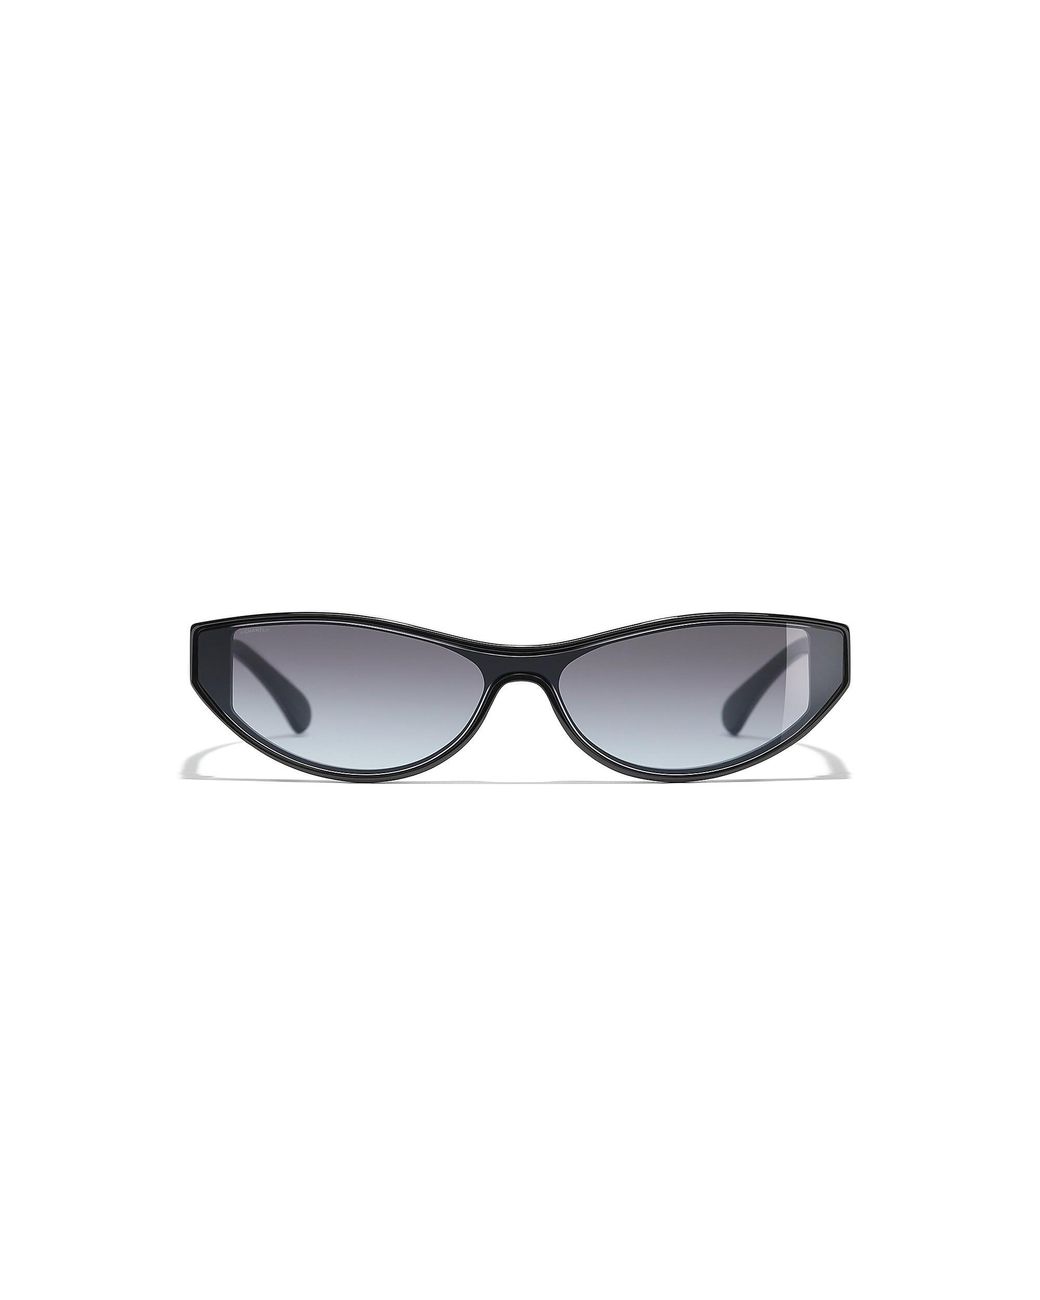 Chanel Cat Eye Sunglasses Ch5415 in Grey